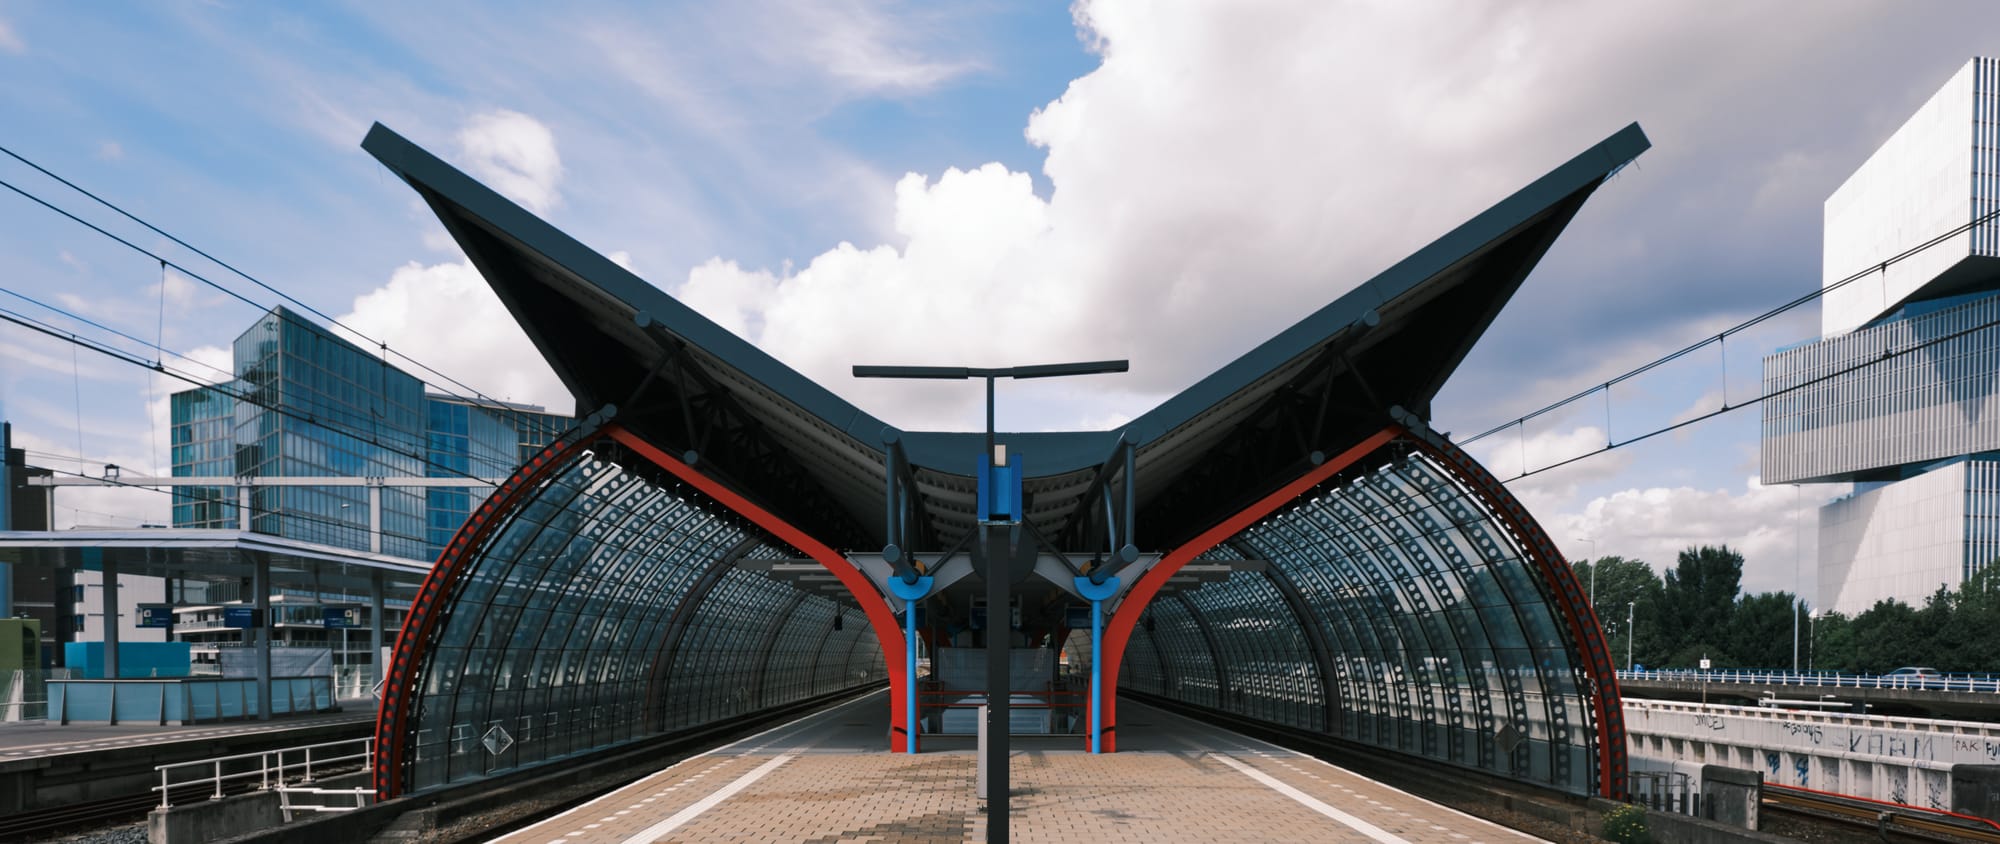 Stations: Amsterdam